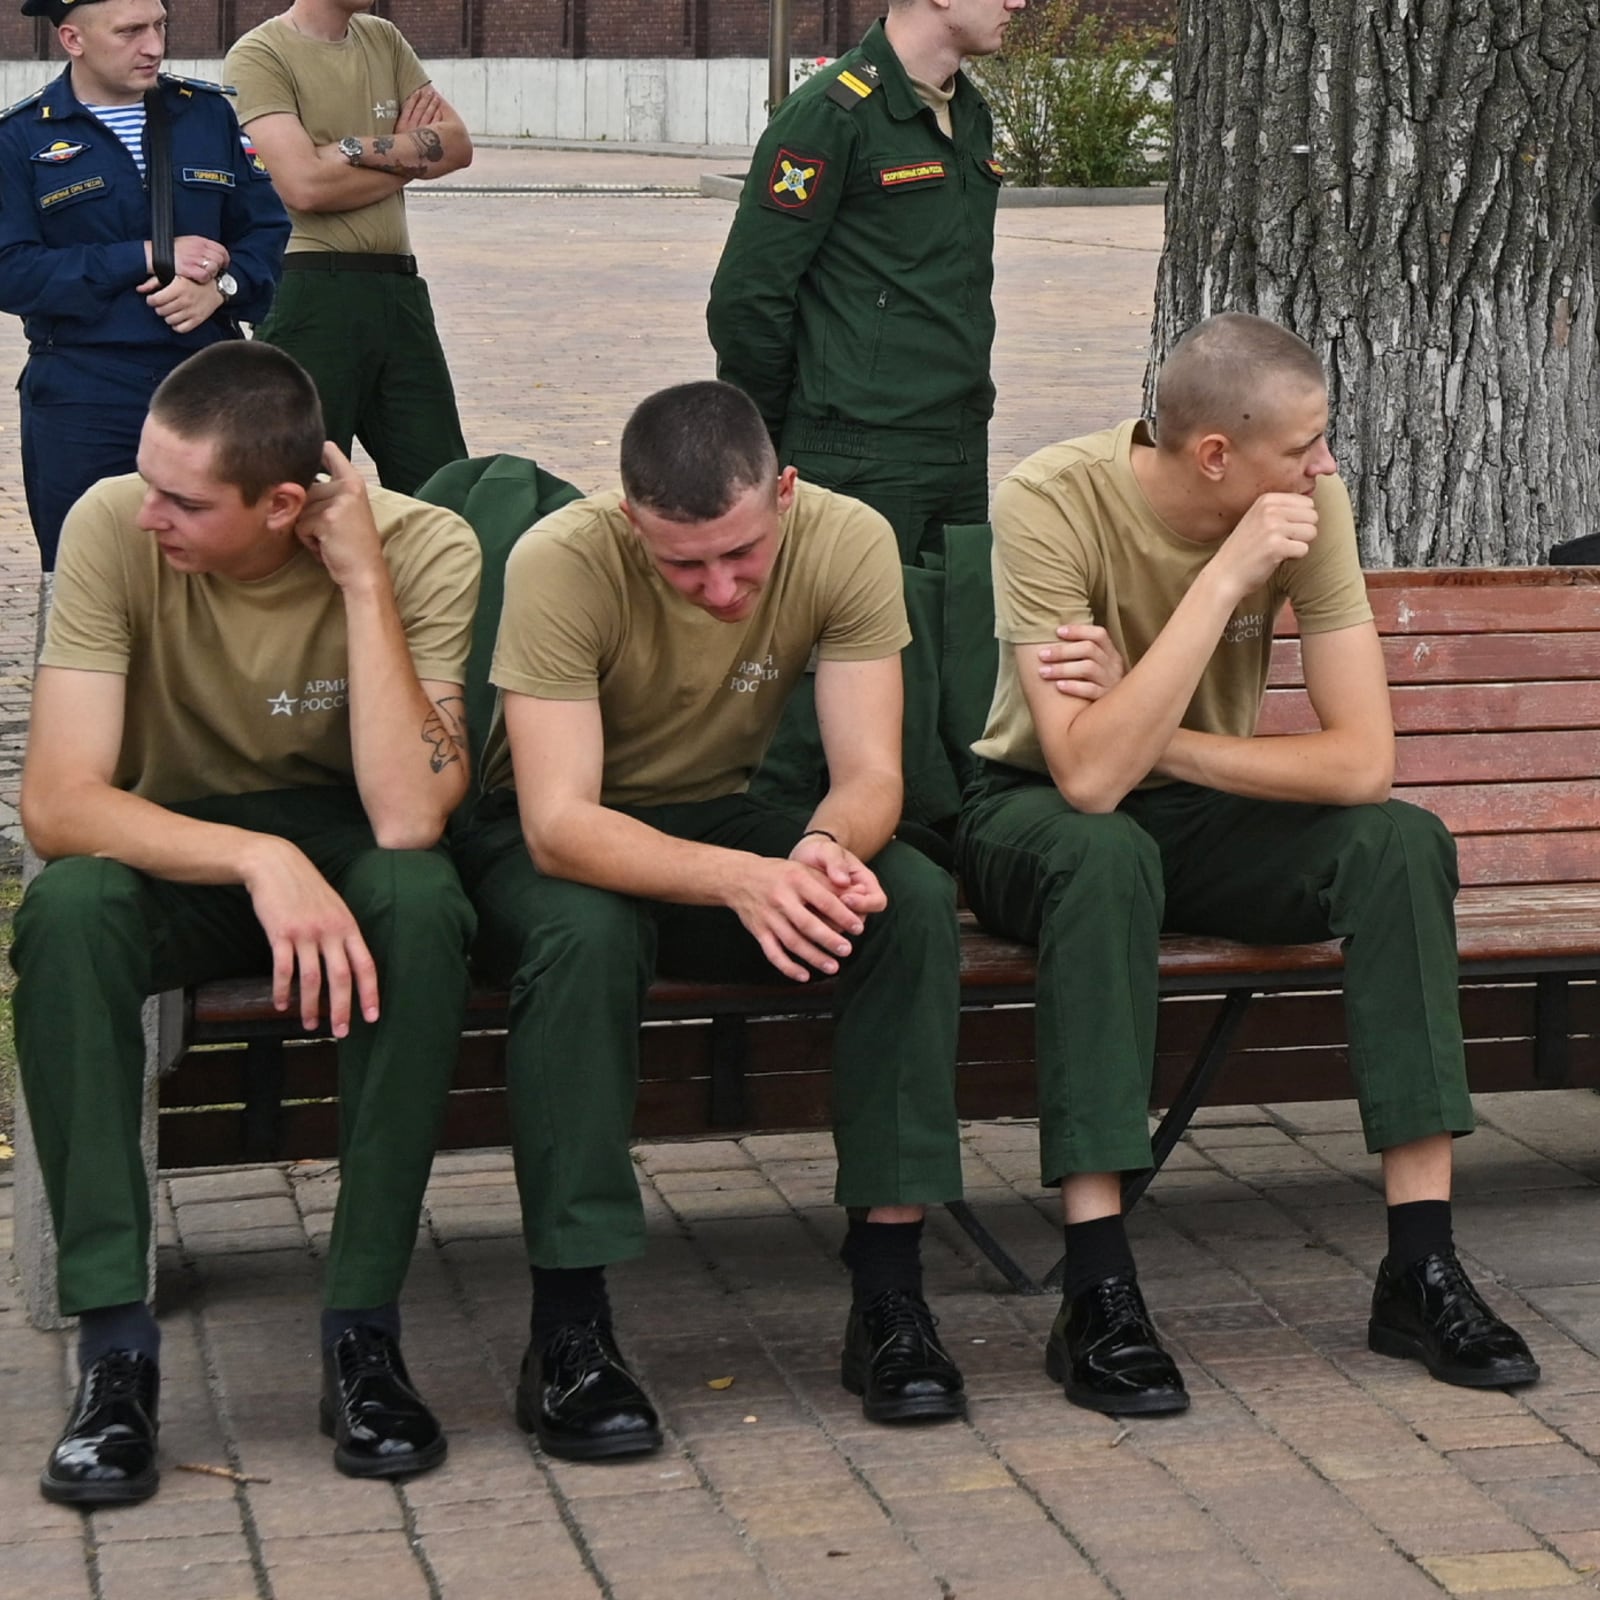 https://images.news18.com/ibnlive/uploads/2022/10/reuters-russian-recruits.png